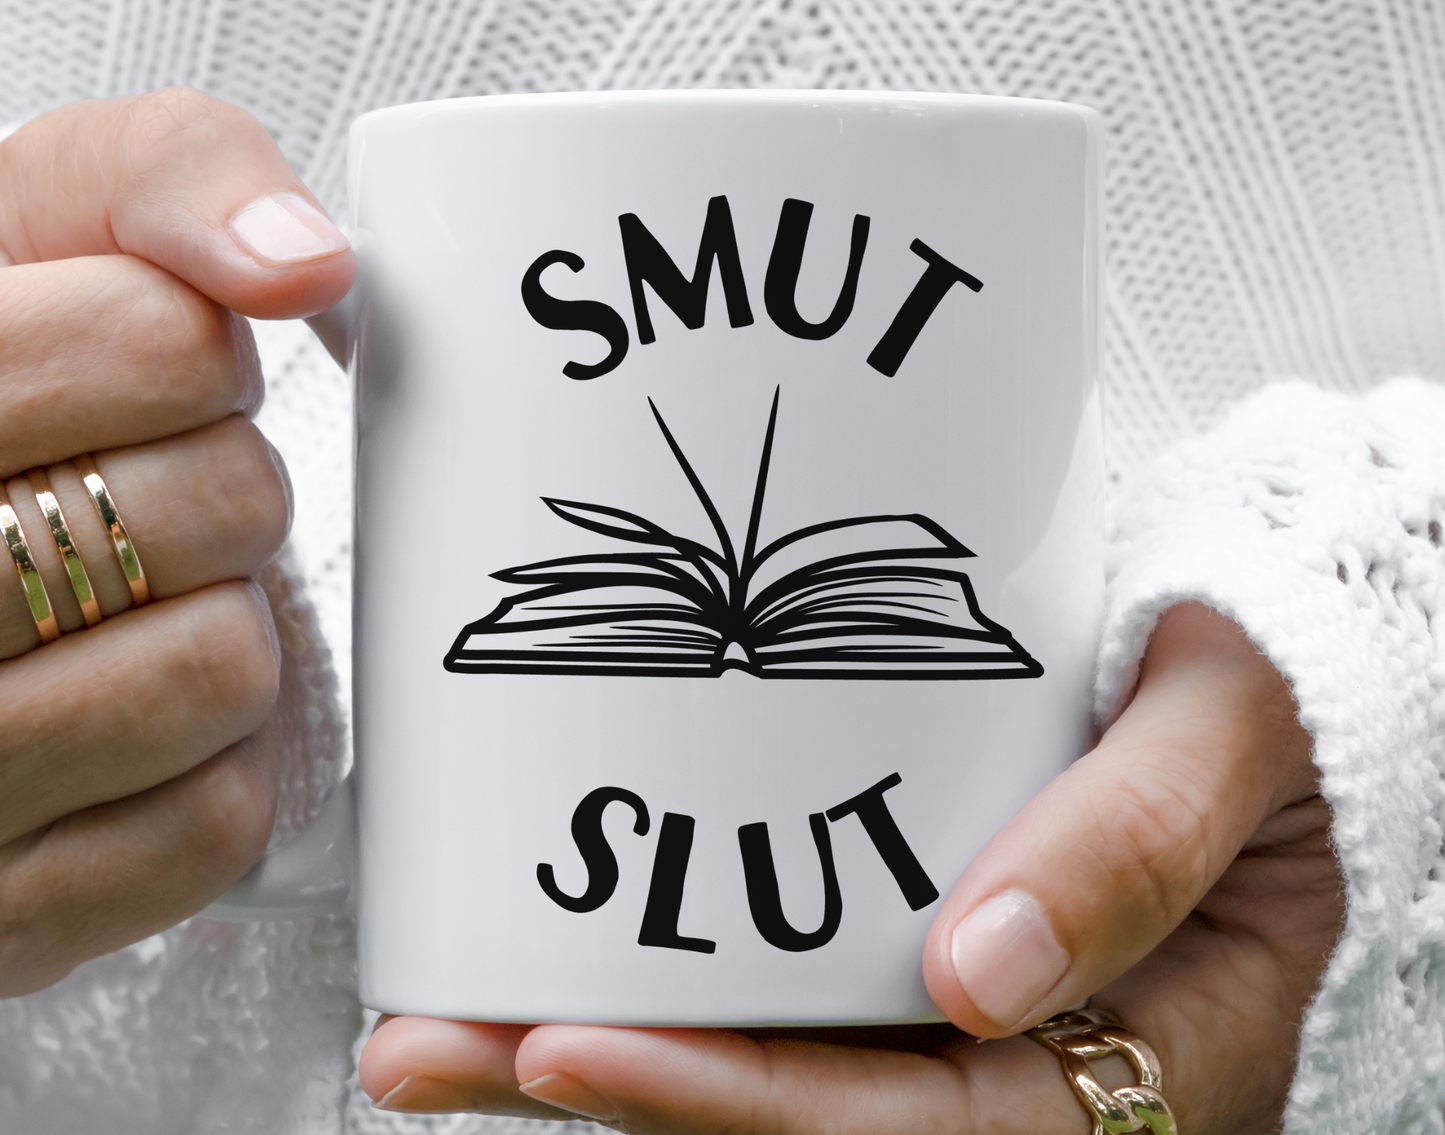 Smut Slut Book Mug